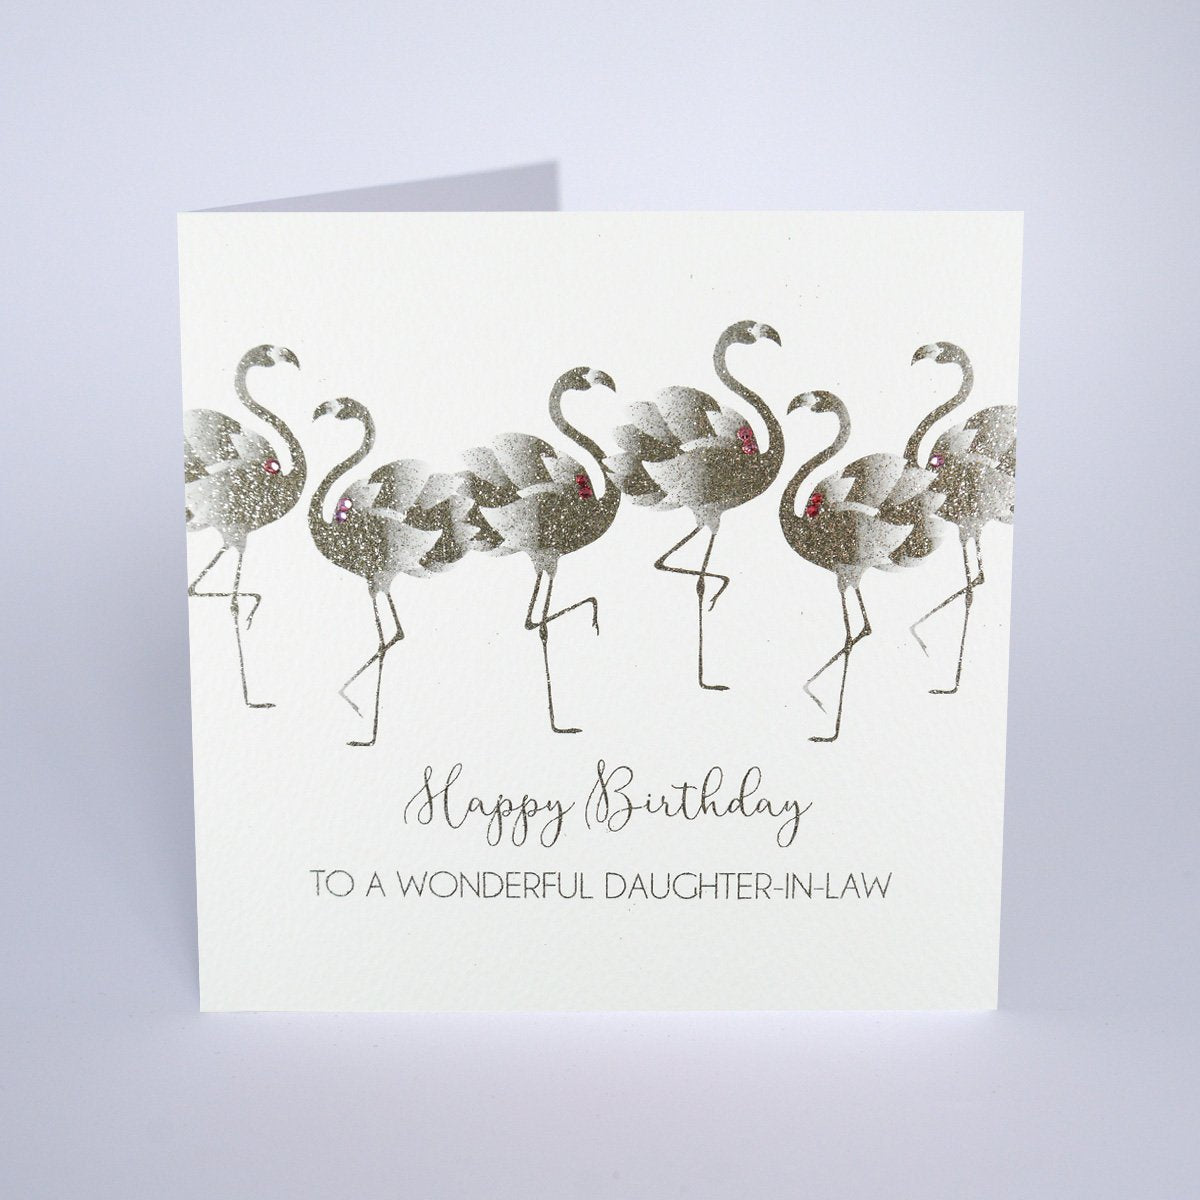 Wonderful Daughter-in-Law Birthday Card